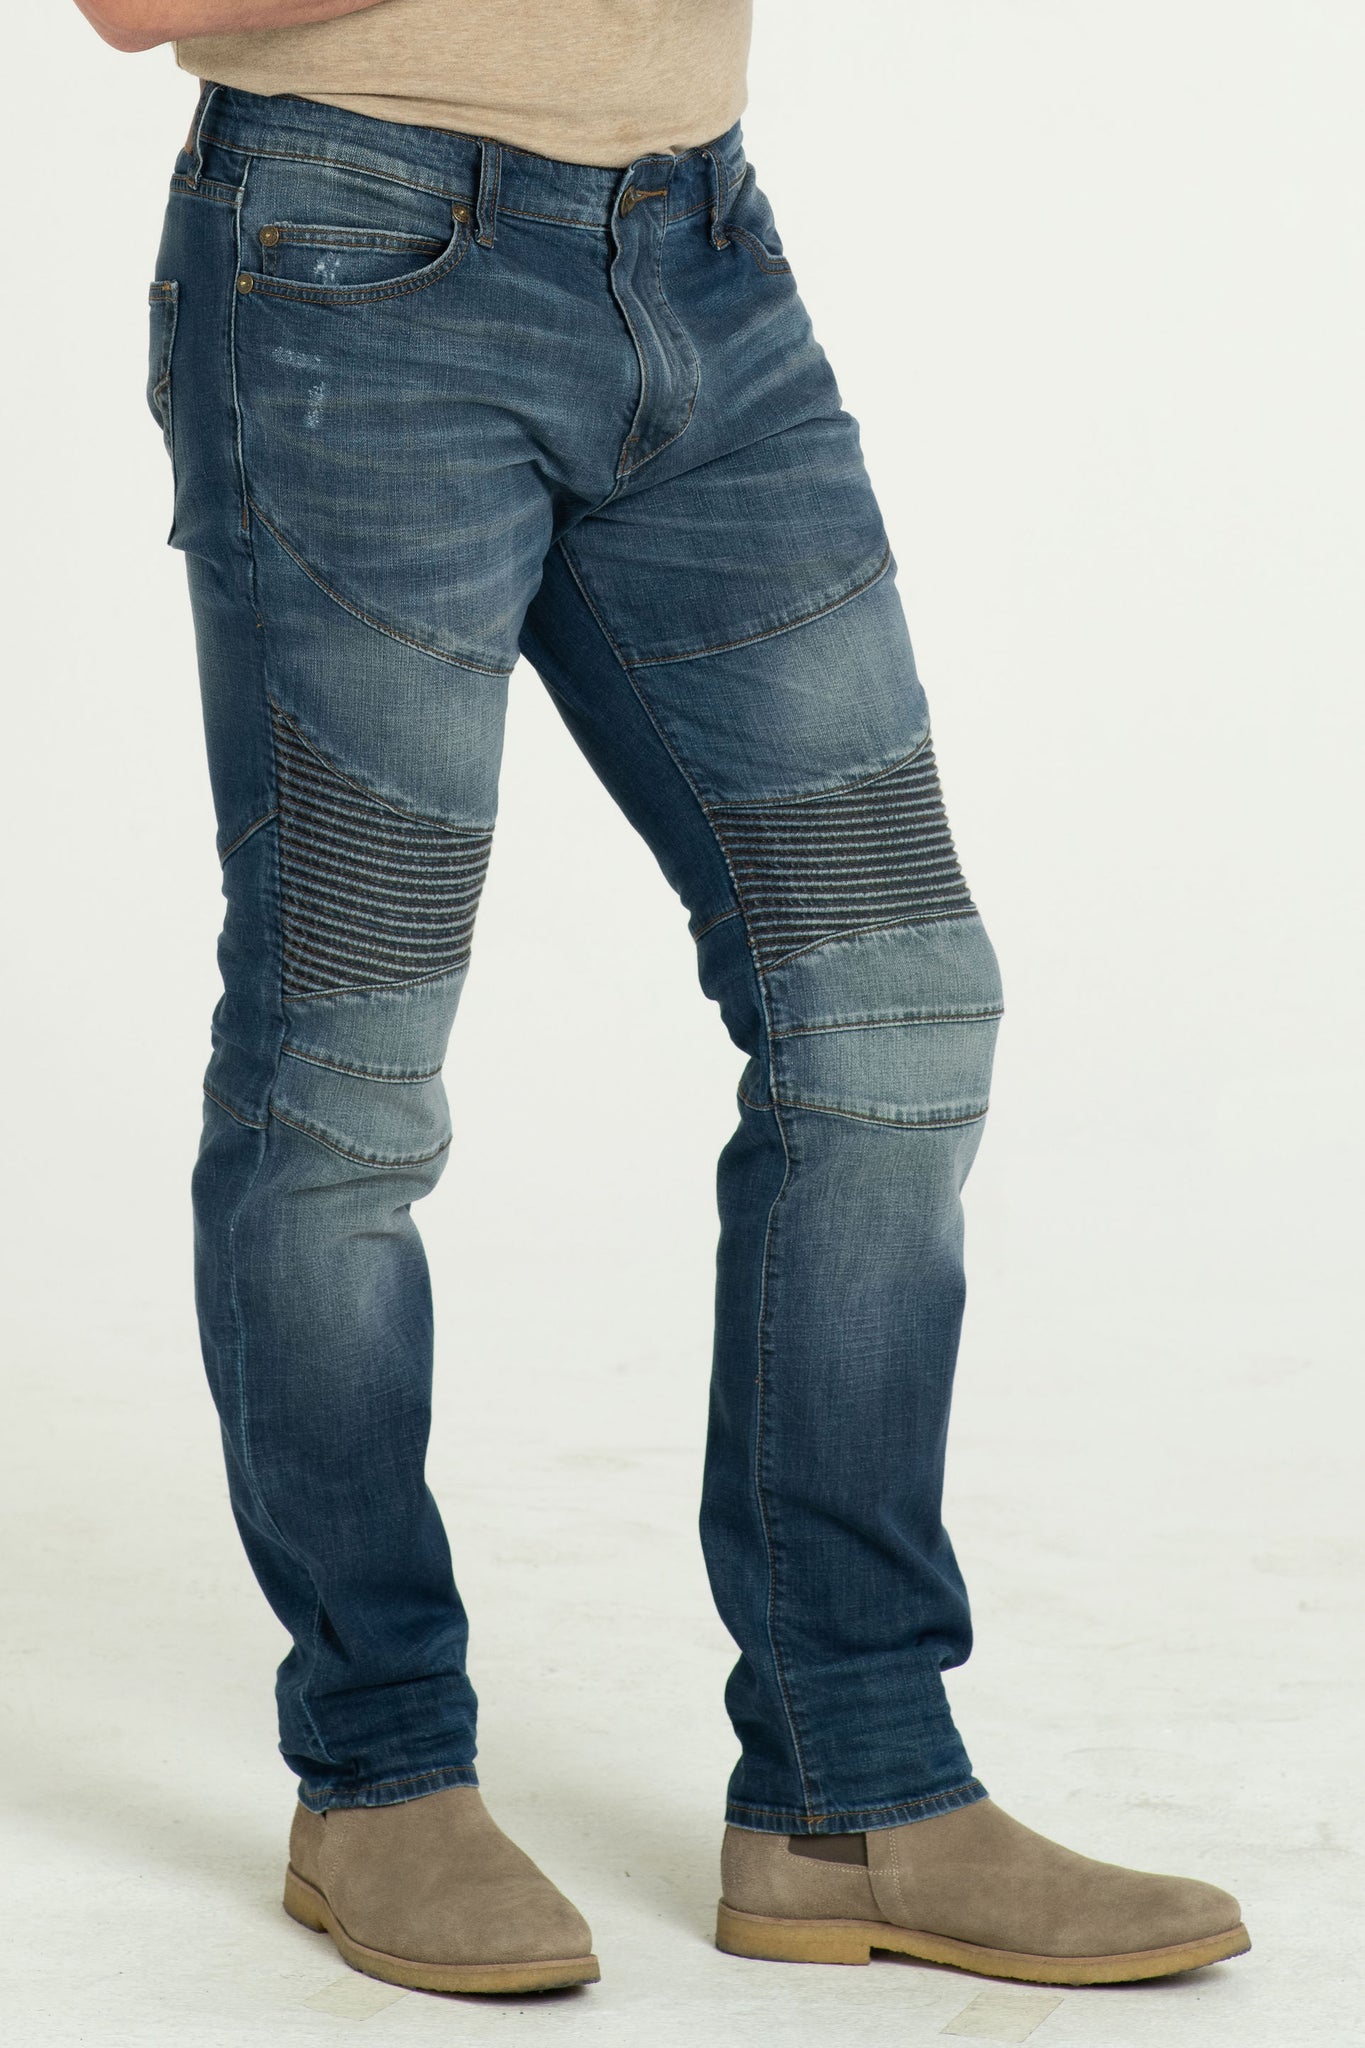 MOTO DENIM PANTS IN DESERT DAYZ – Stitch's Jeans